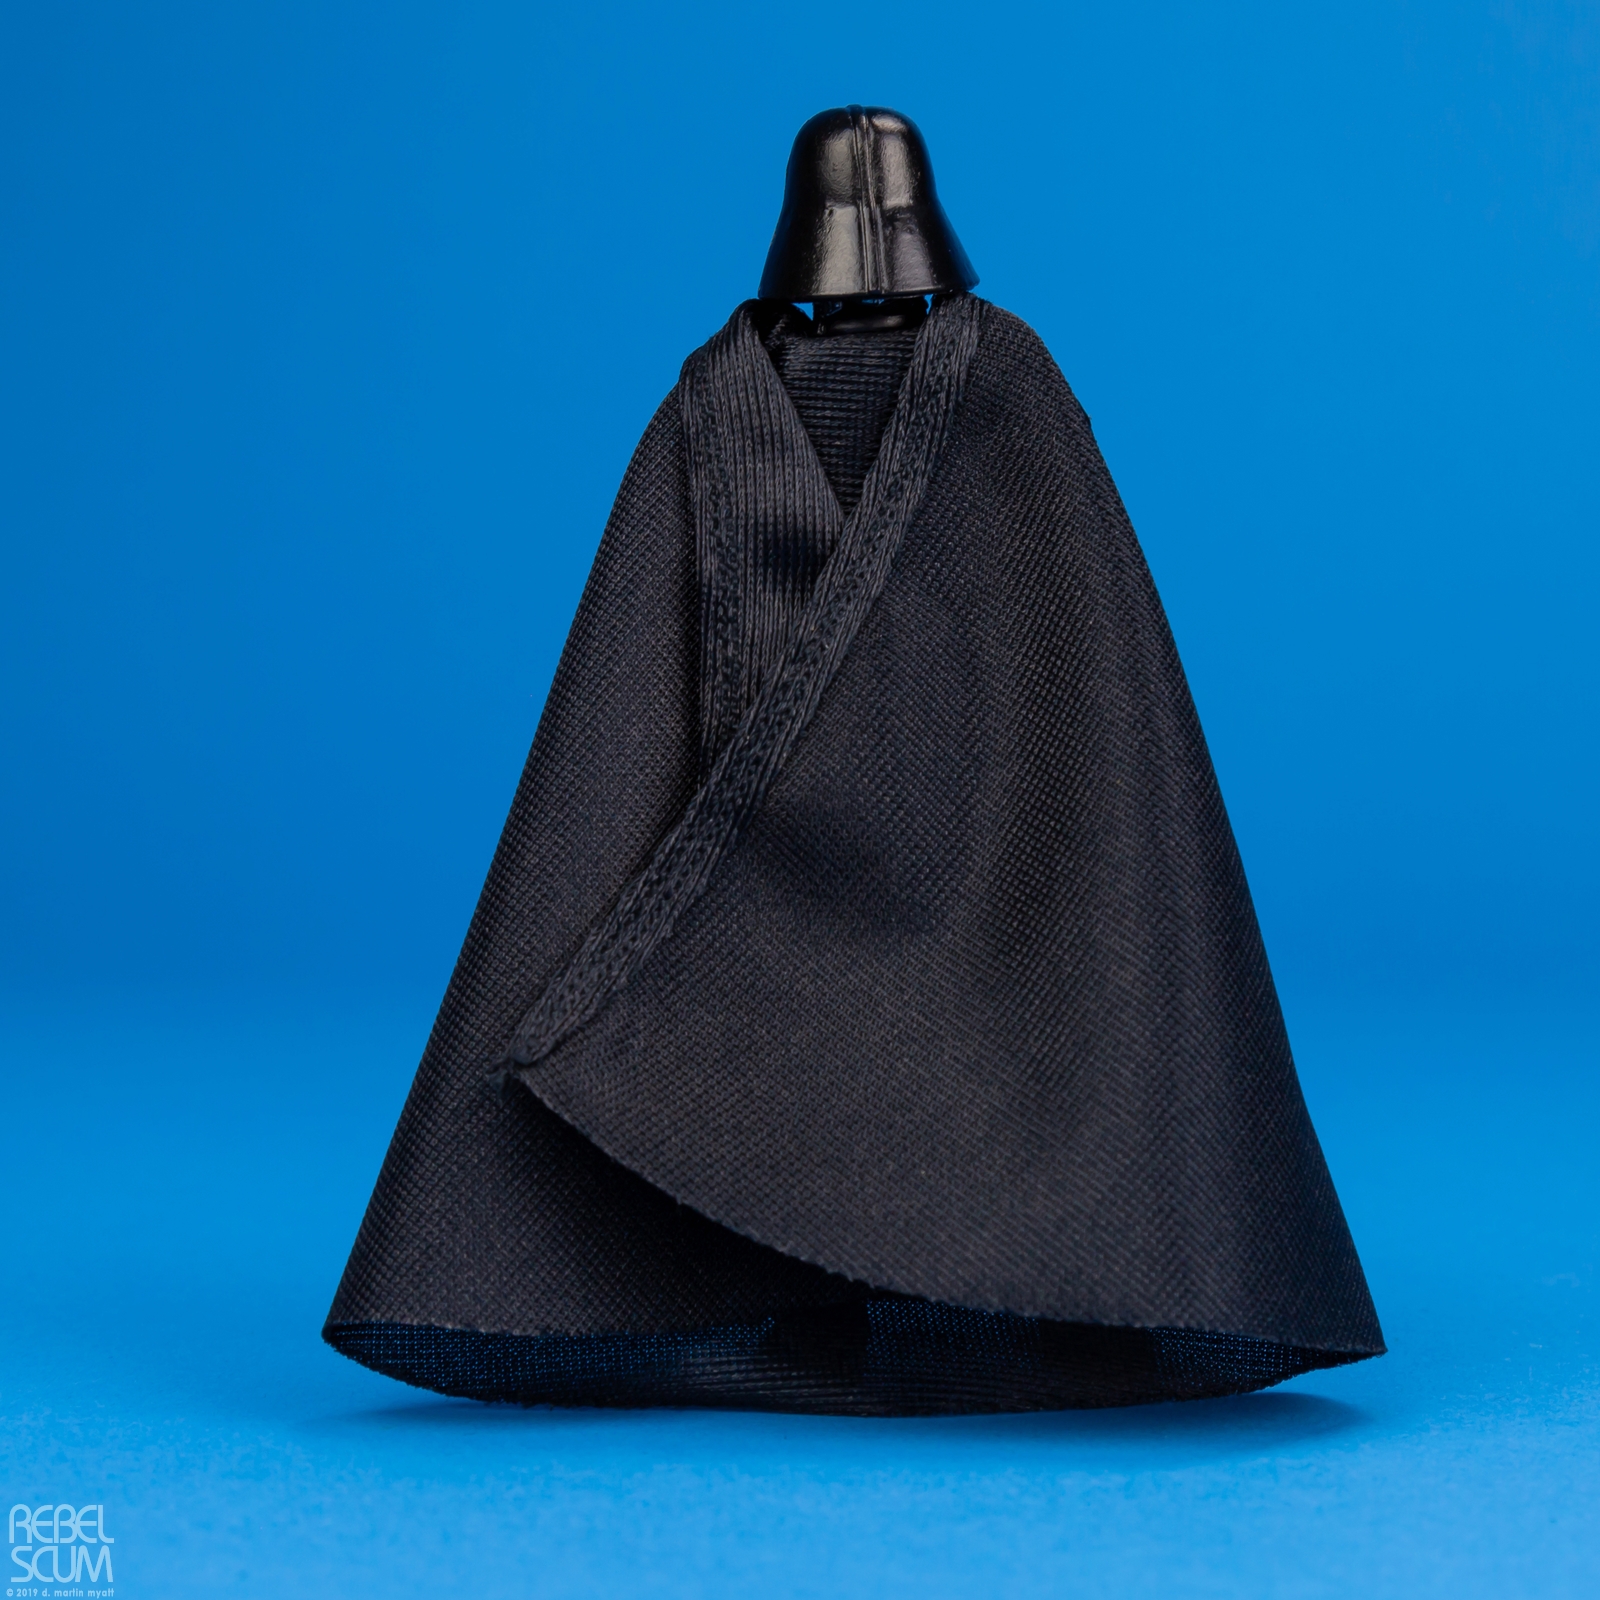 VC08-Darth-Vader-2019-The-Vintage-Collection-008.jpg